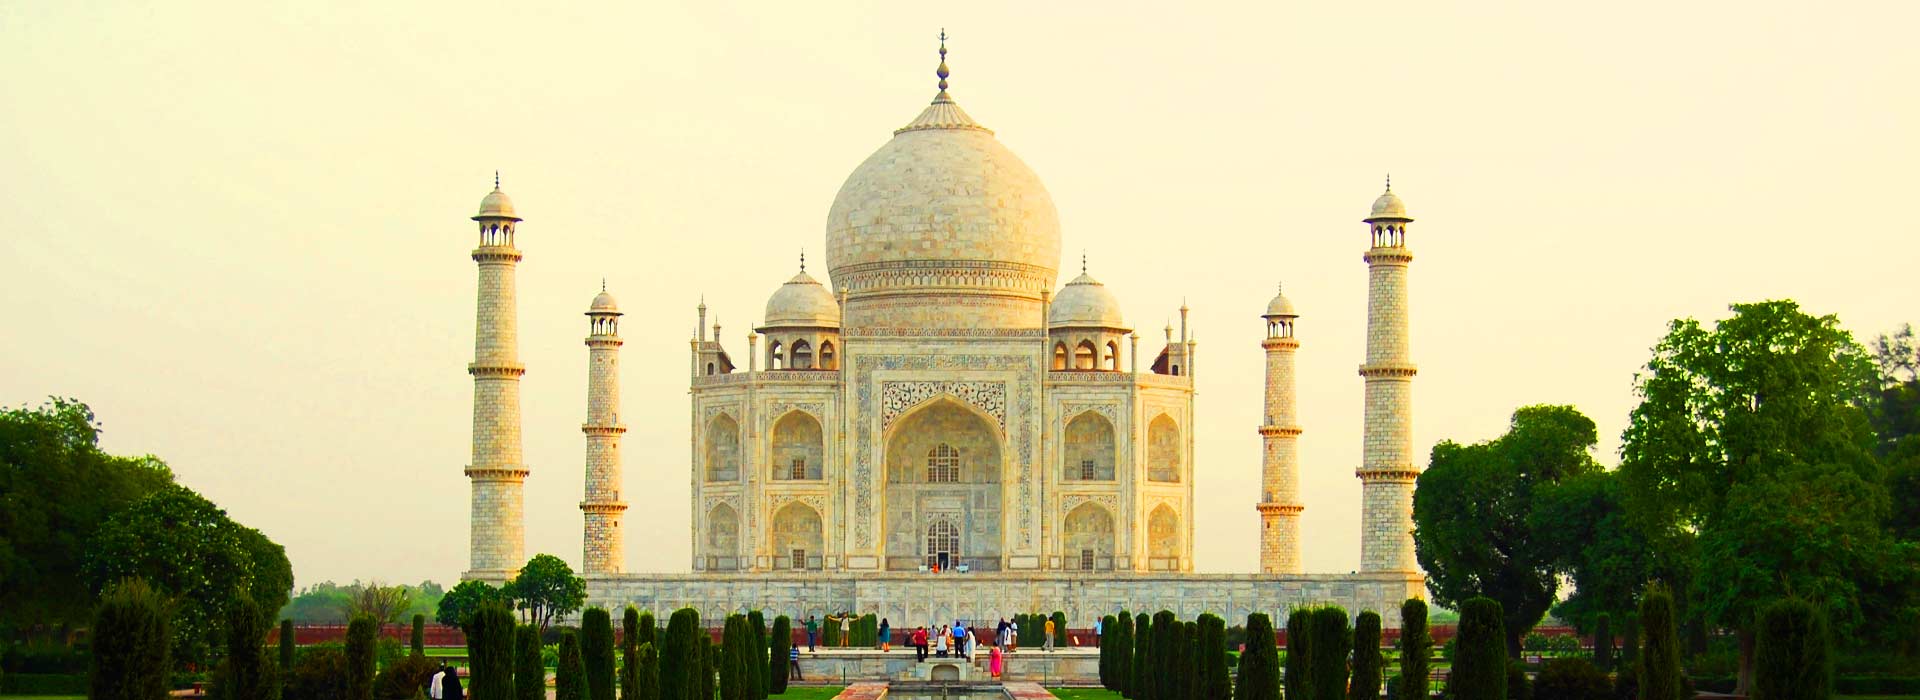 Taj Mahal (AGRA)